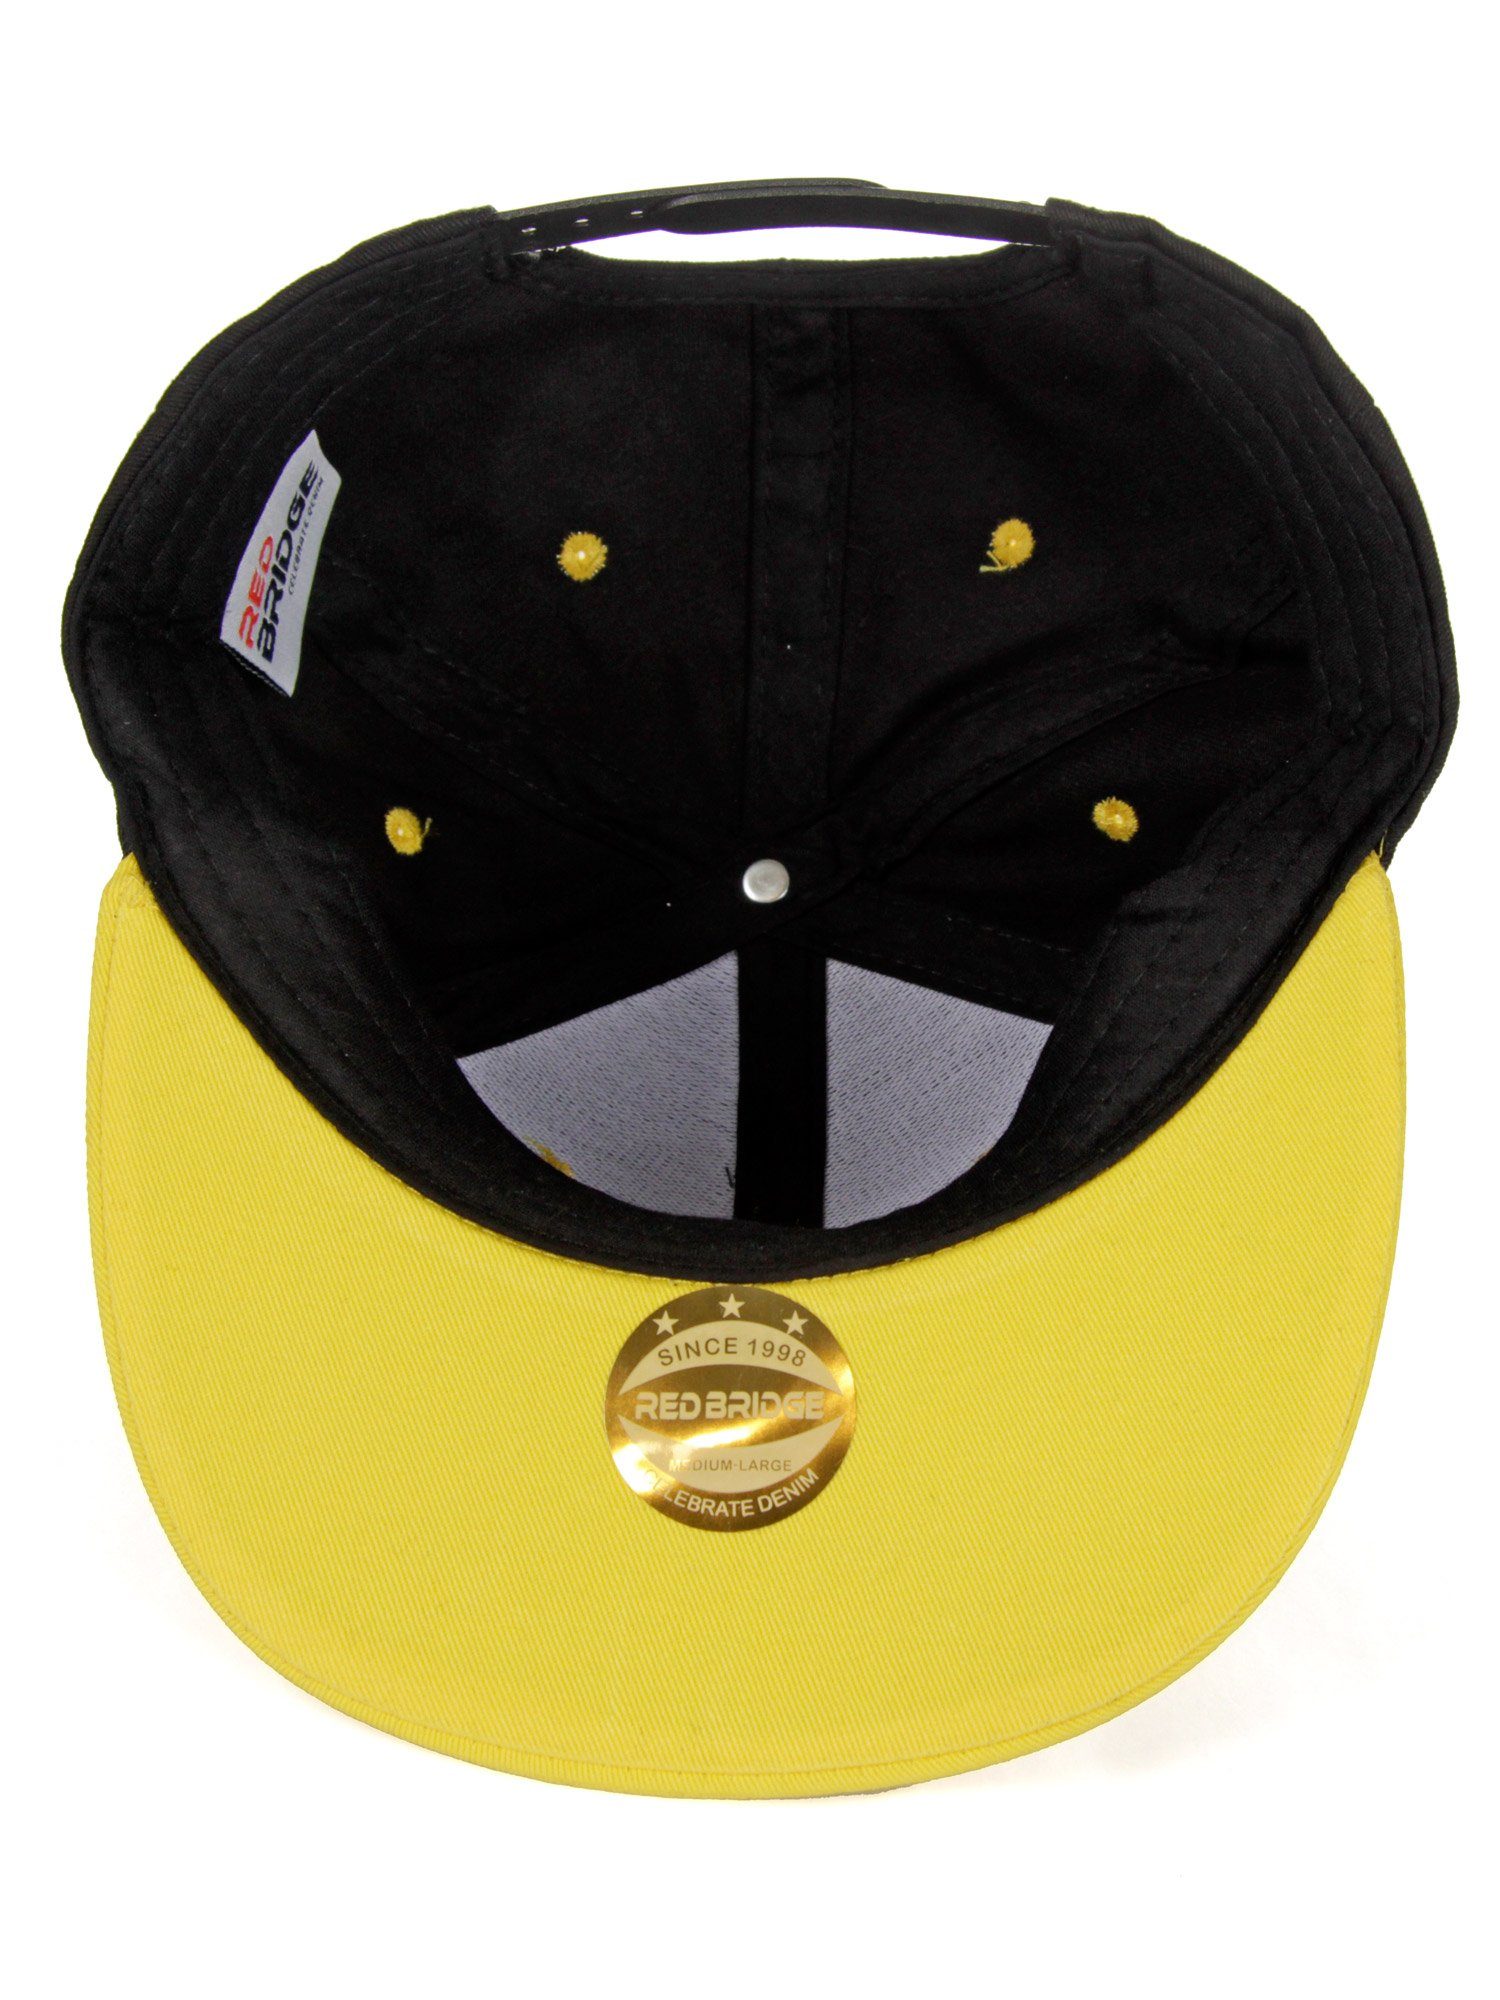 RedBridge Baseball Lancaster schwarz-gelb Schirm mit kontrastfarbigem Cap